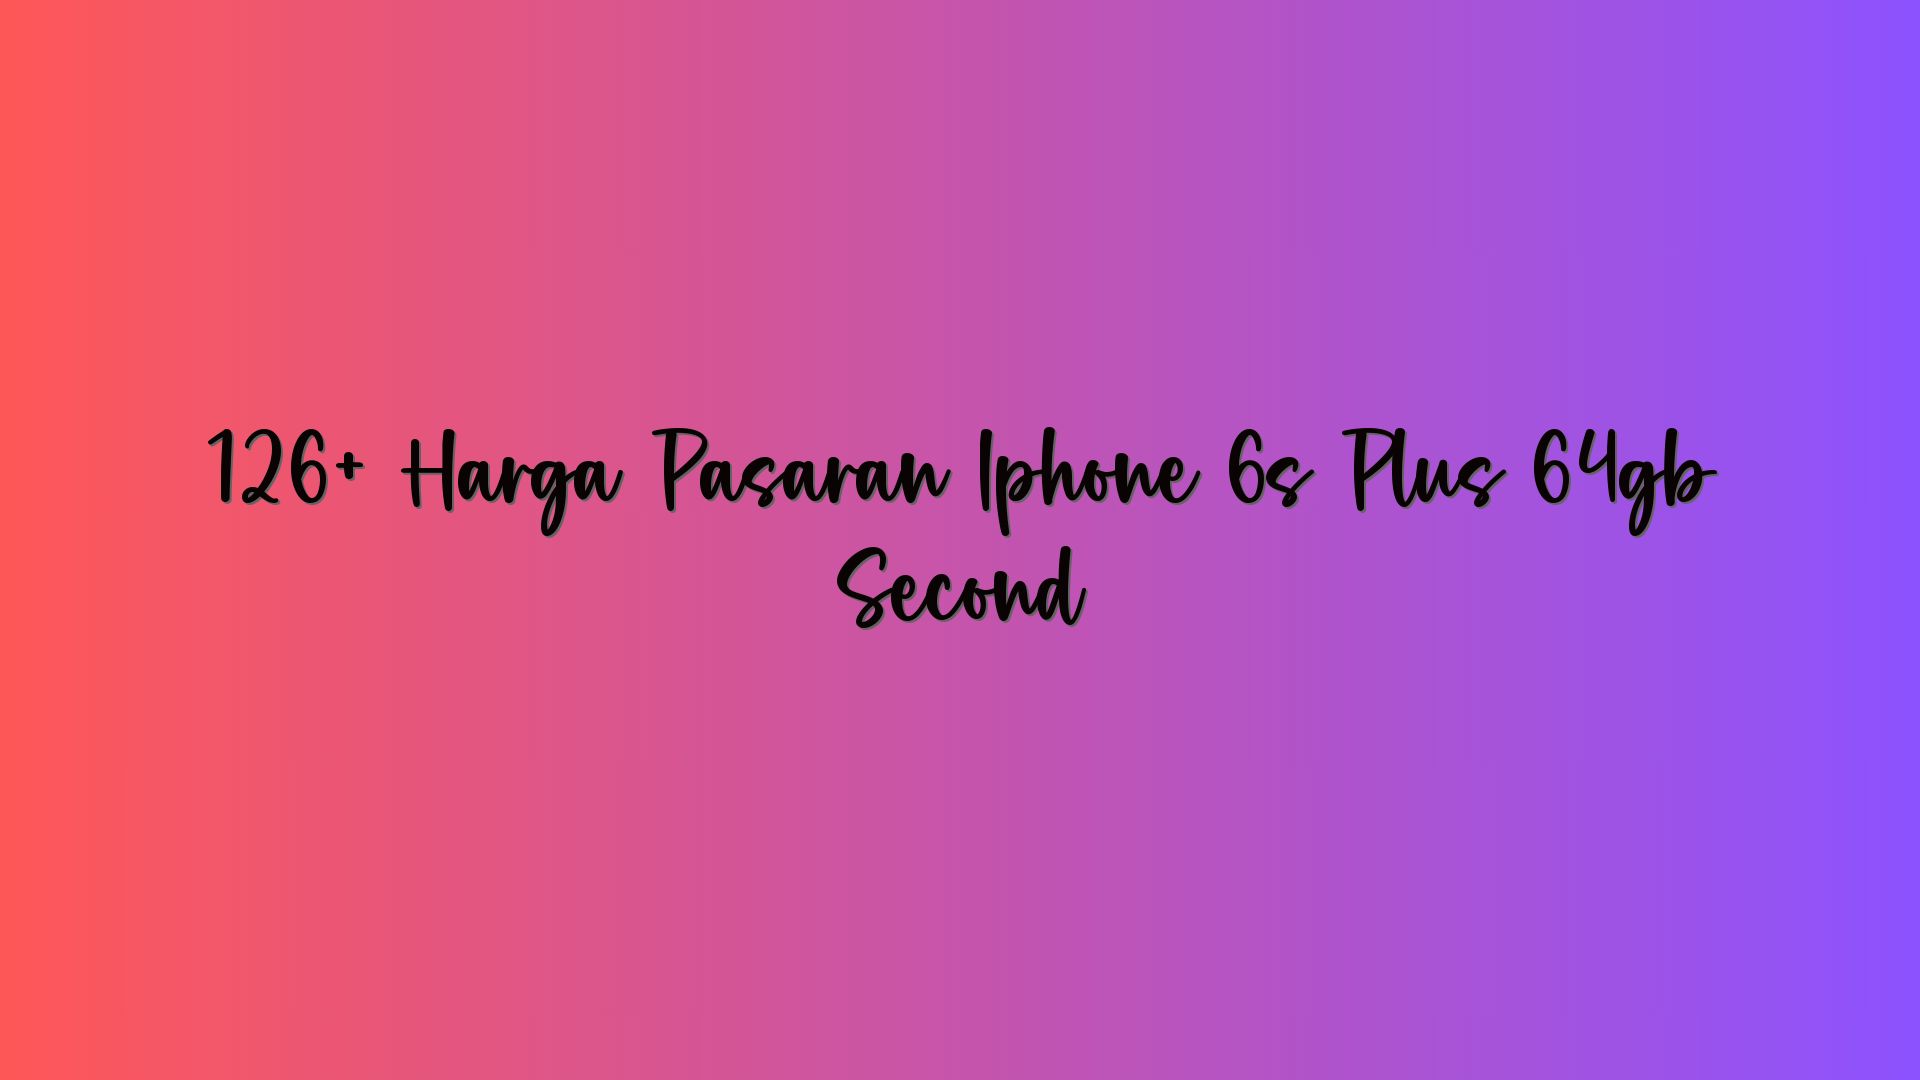 126+ Harga Pasaran Iphone 6s Plus 64gb Second